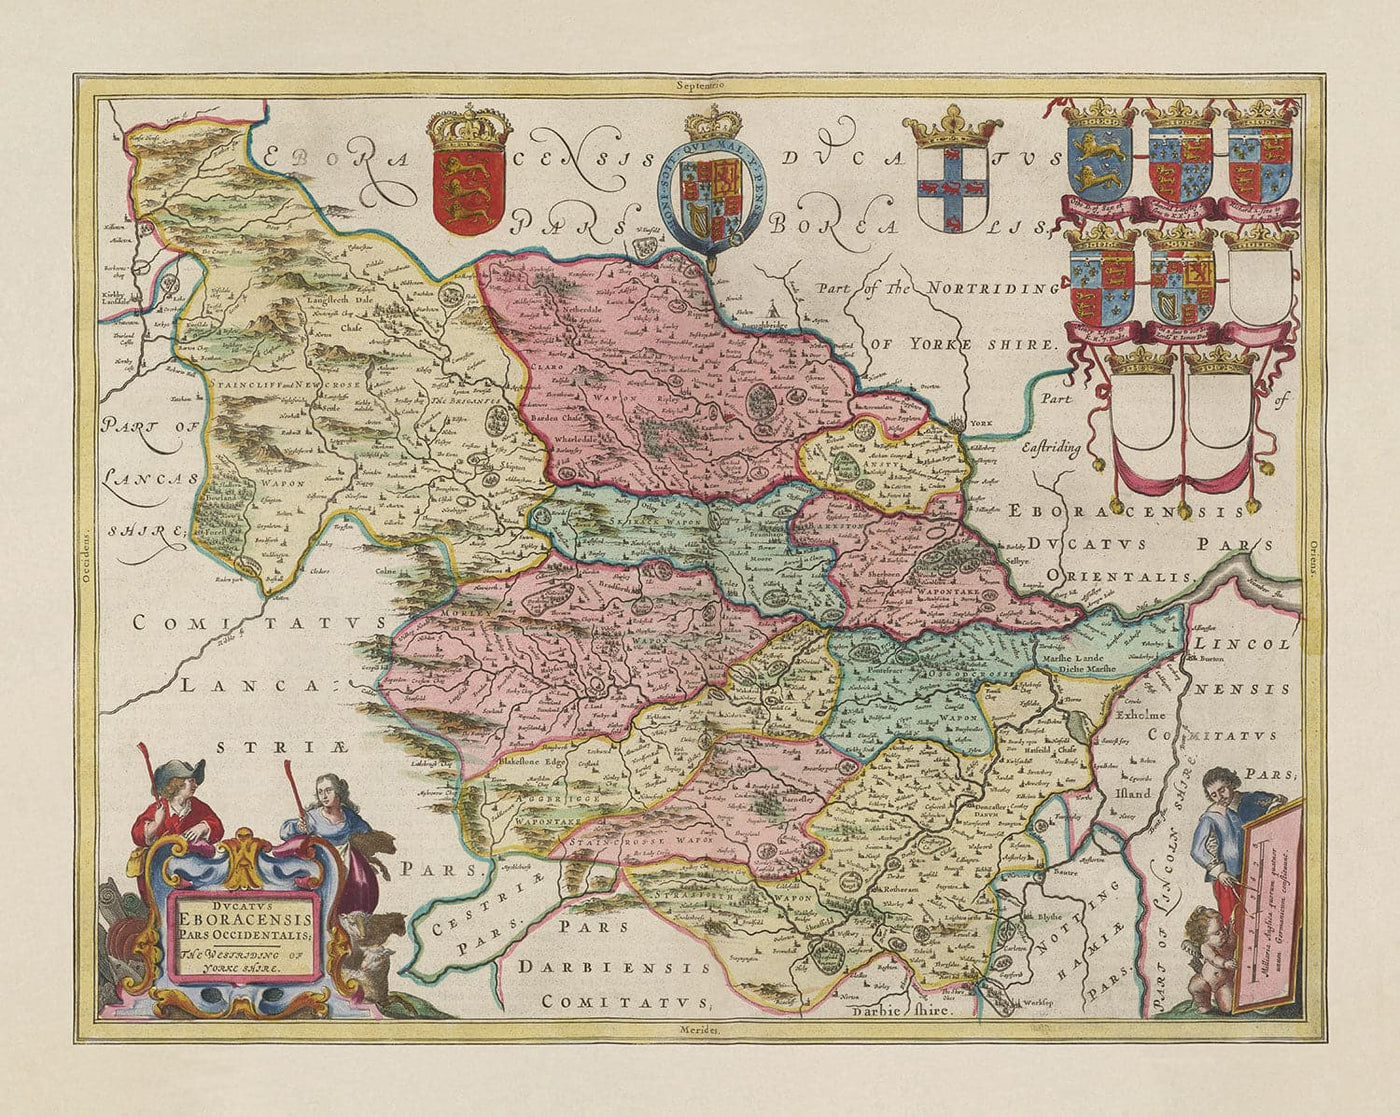 Old Map of West Yorkshire, 1665 by Joan Blaeu - York, Bradford, Sheffield, Leeds, Huddersfield, Halifax, Wakefield